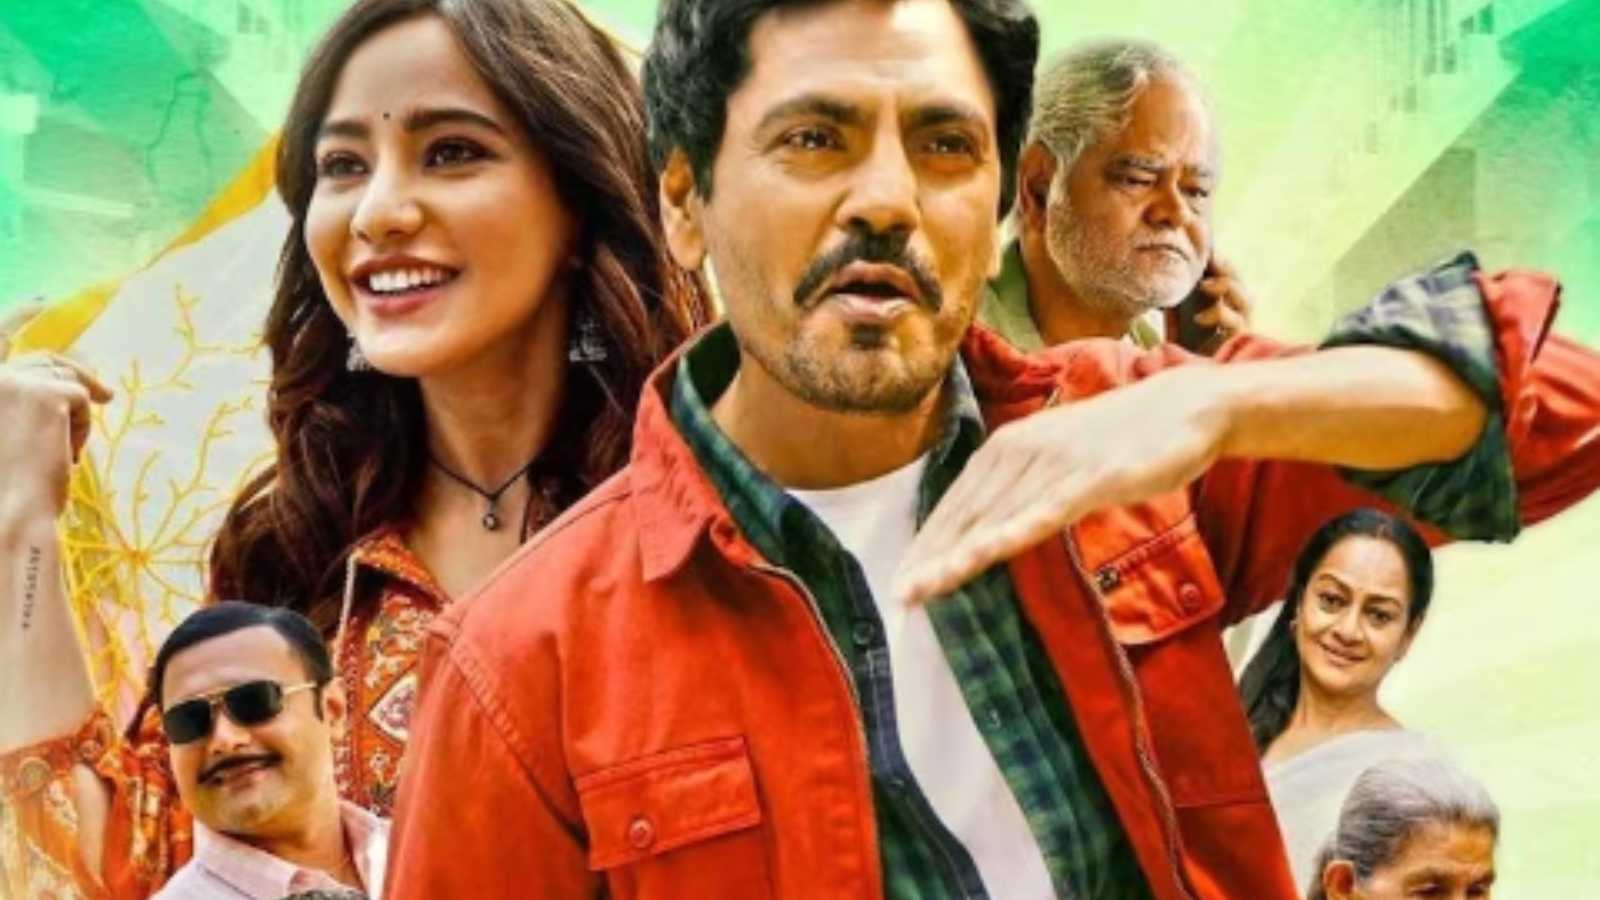 Jogira Sara Ra Ra Movie Review: Nawazuddin Siddiqui starrer misses the mark despite the tongue-in-cheek humour